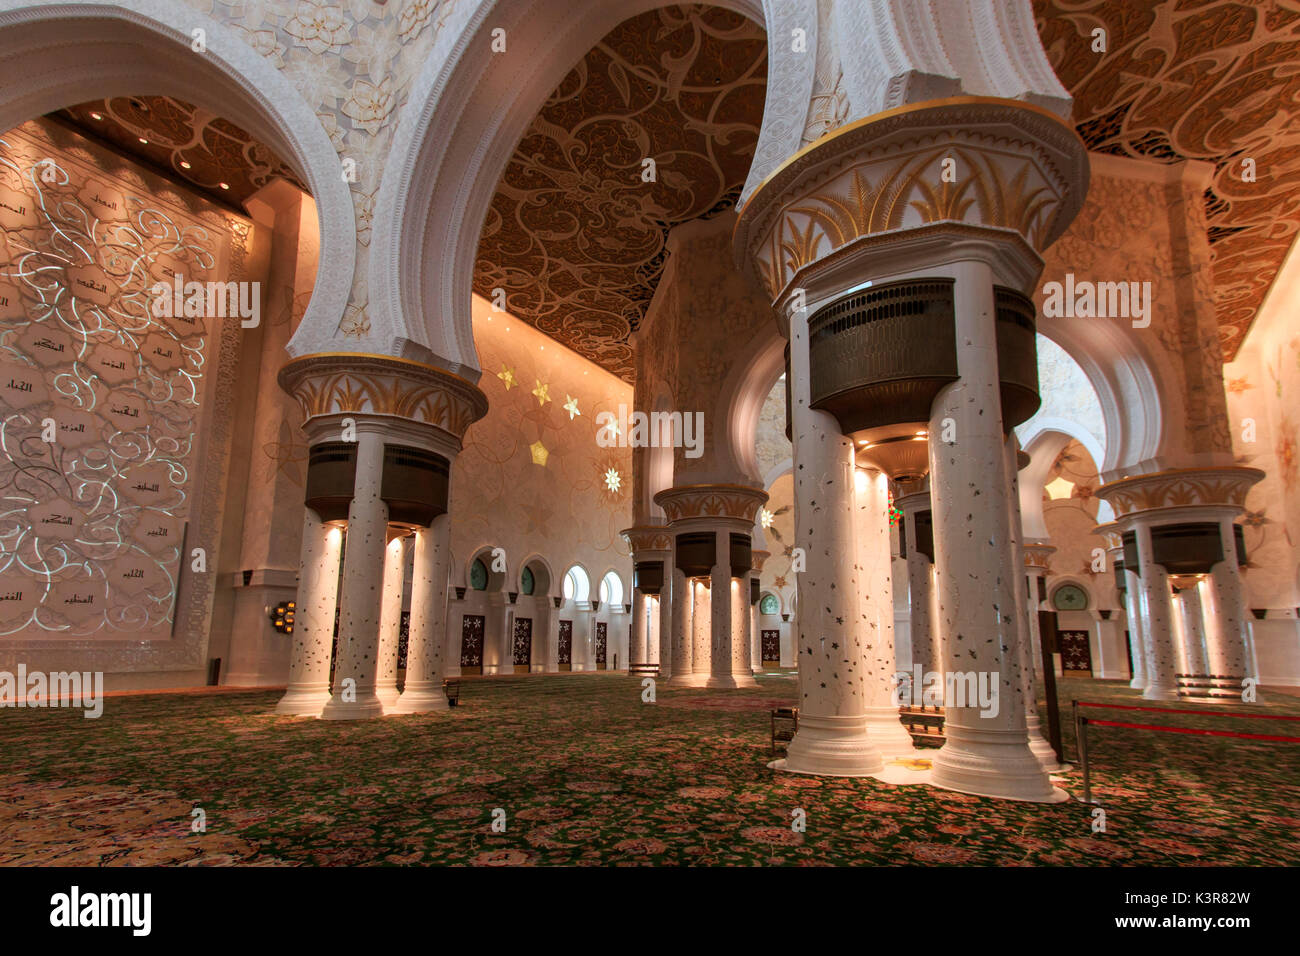 Abu Dhabi, United Arab Emirates. Interior of the Sheikh Zayed Grand Mosque in Abu Dhabi Stock Photo